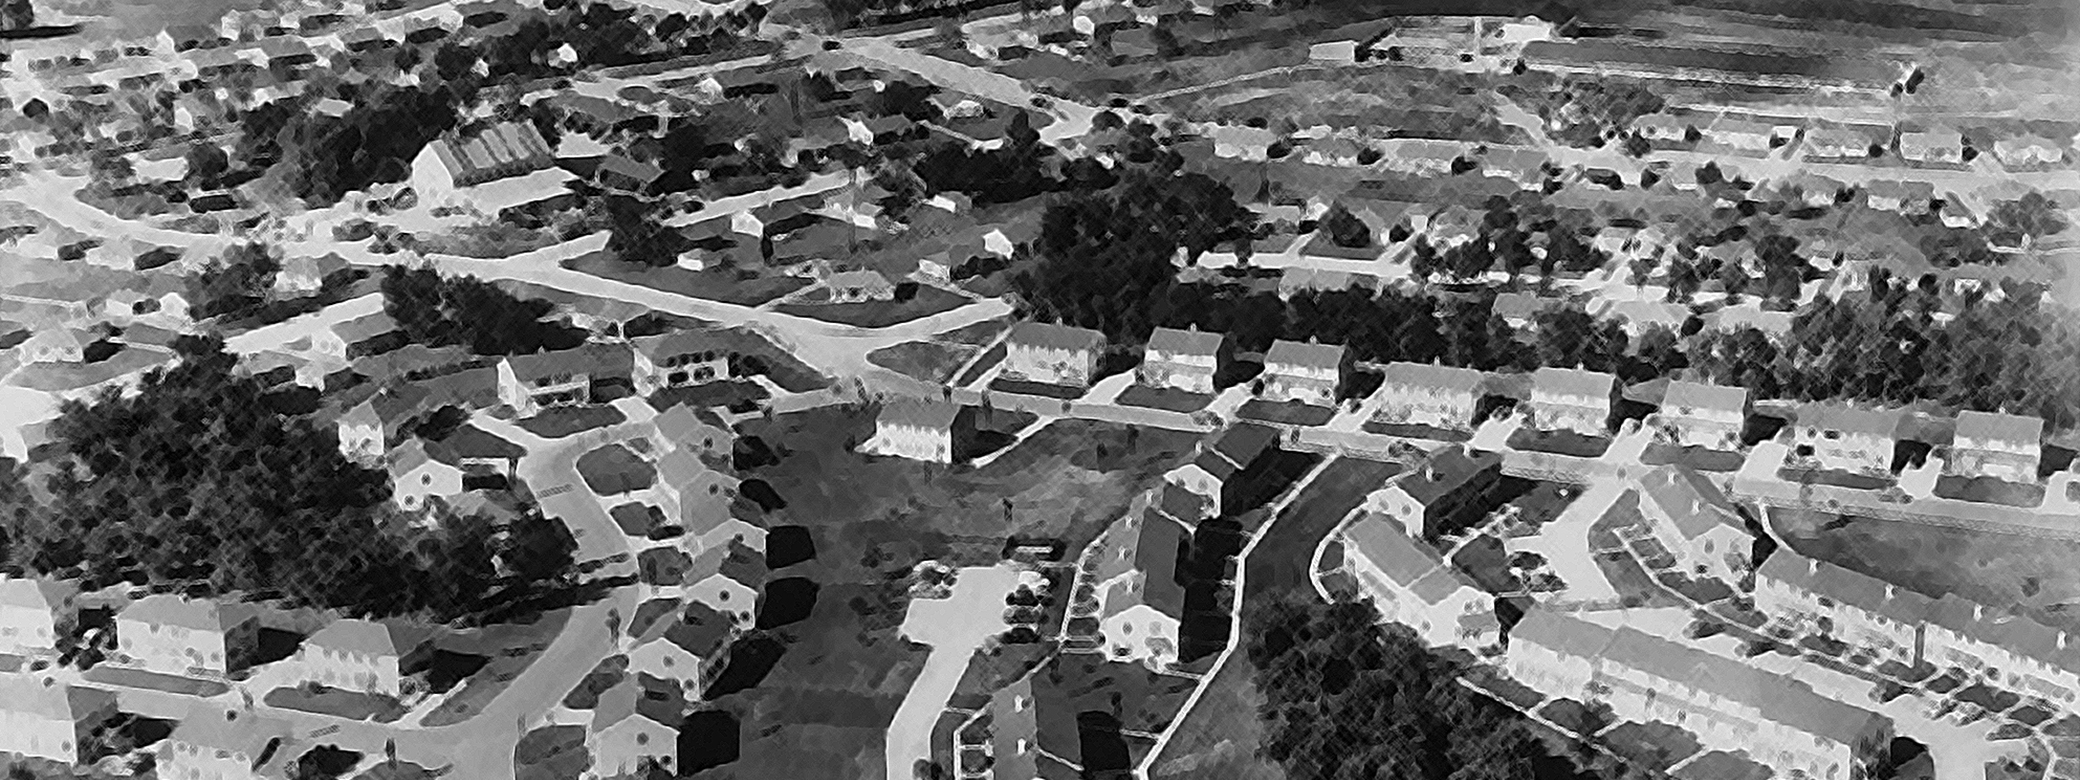 Stylized image of a 1950s neighborhood subdivision.